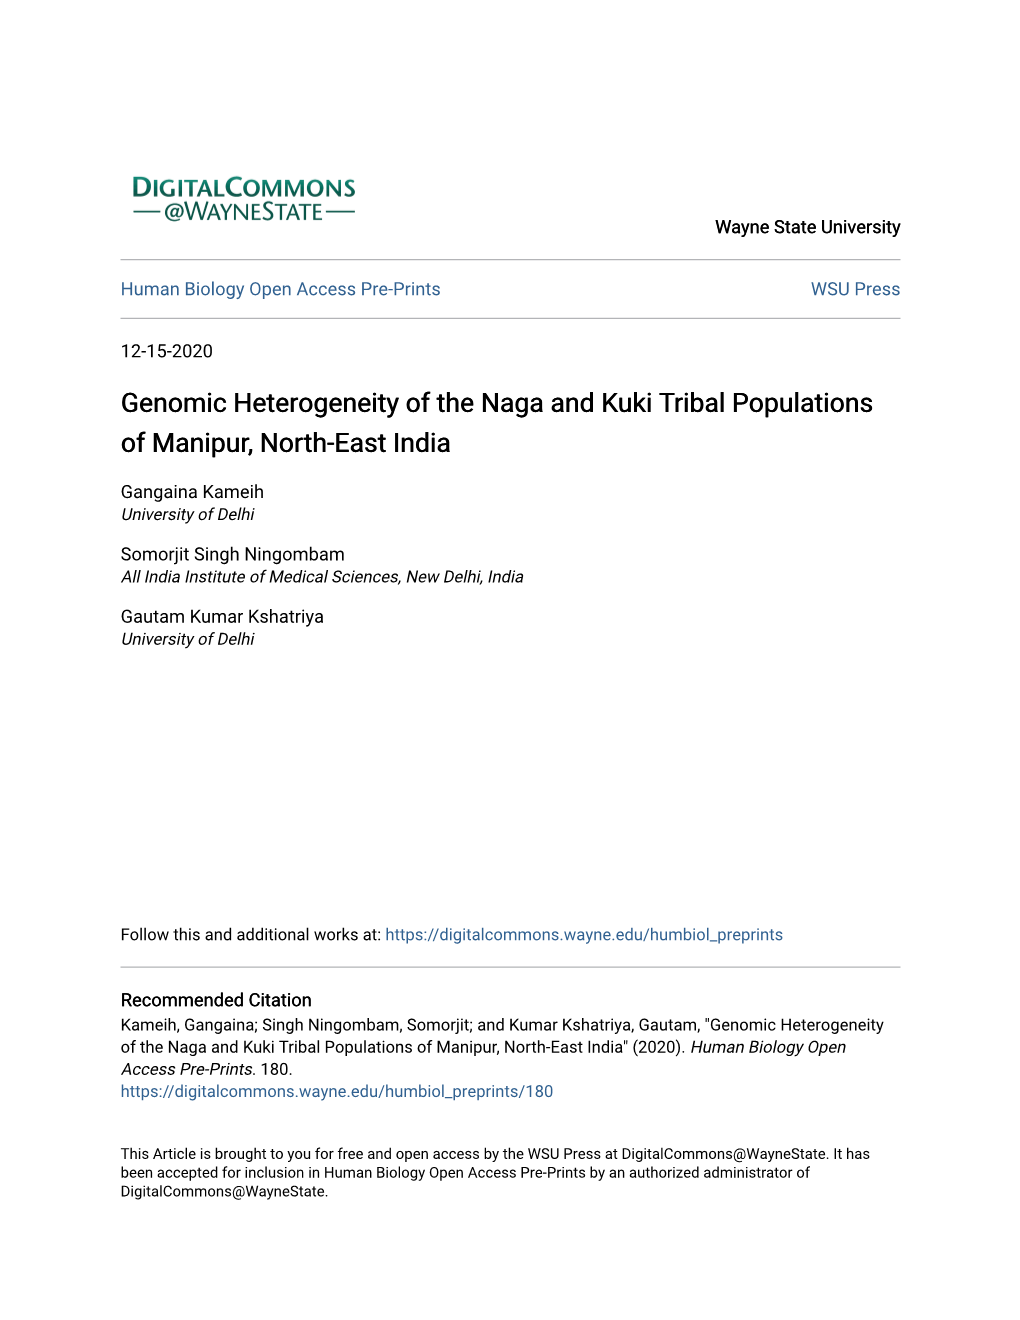 Genomic Heterogeneity of the Naga and Kuki Tribal Populations of Manipur, North-East India